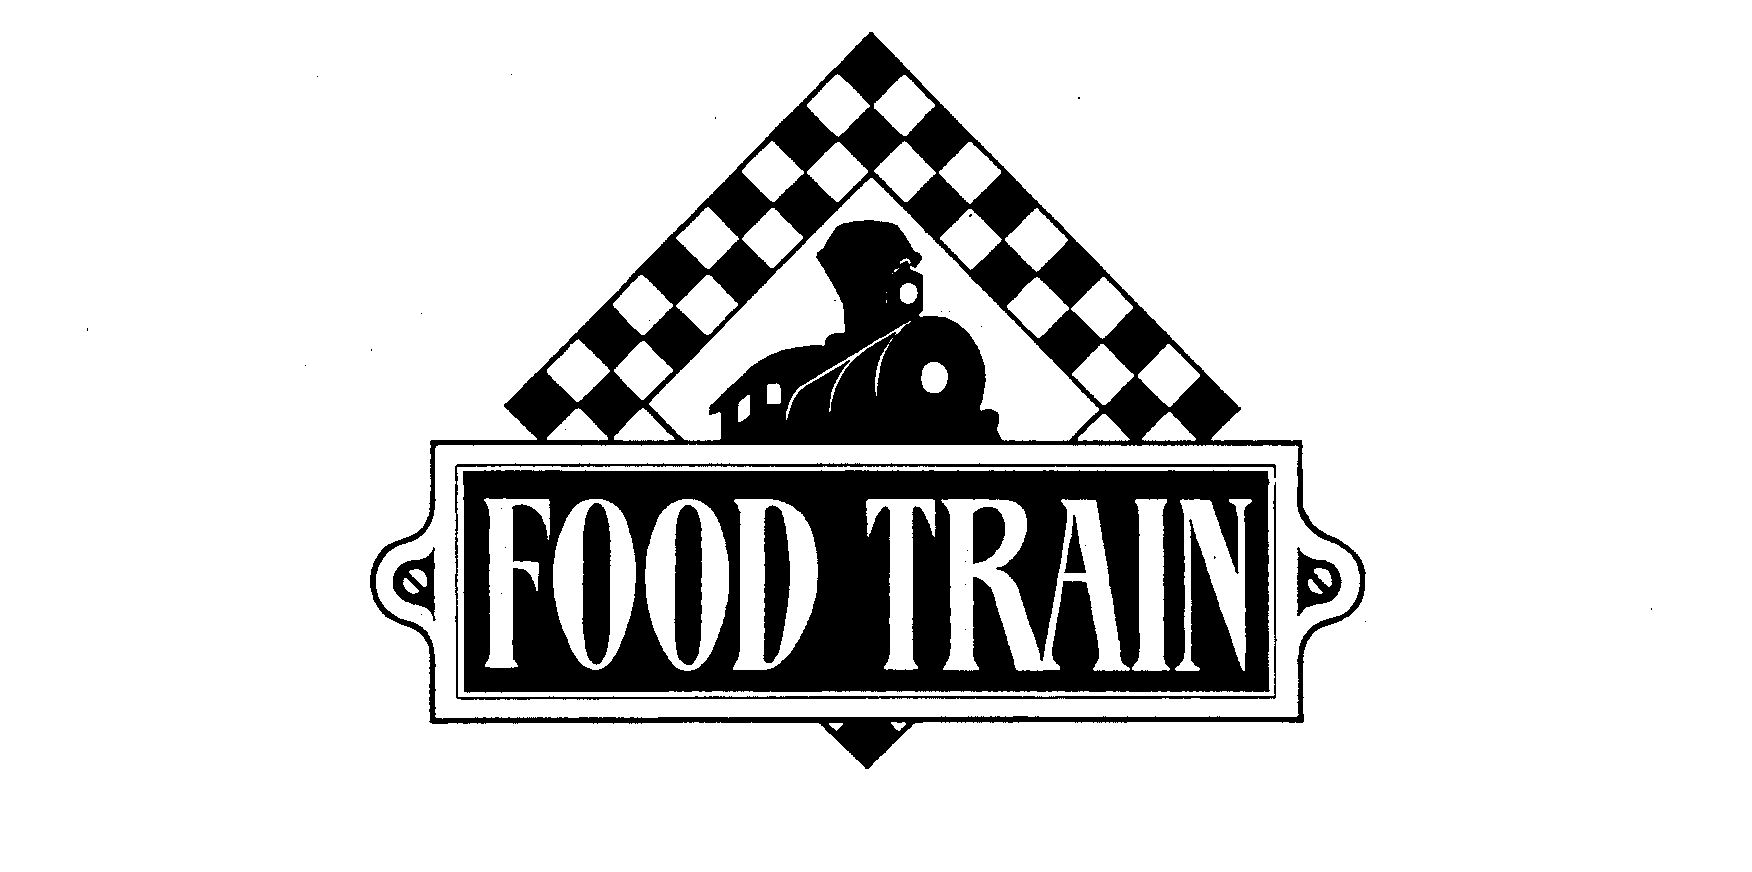  FOOD TRAIN